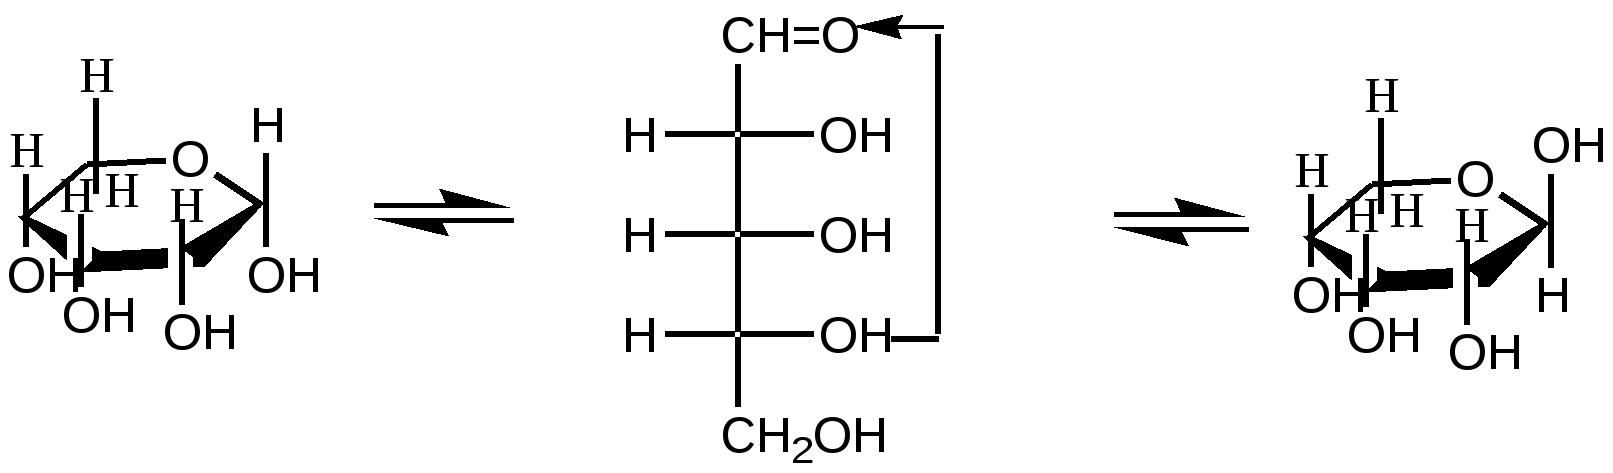 Рибоза реакция гидролиза. Альфа д рибопираноза формула. Бета д рибопираноза формула. Α-D-рибопираноза. Рибопираноза хелатообразование.